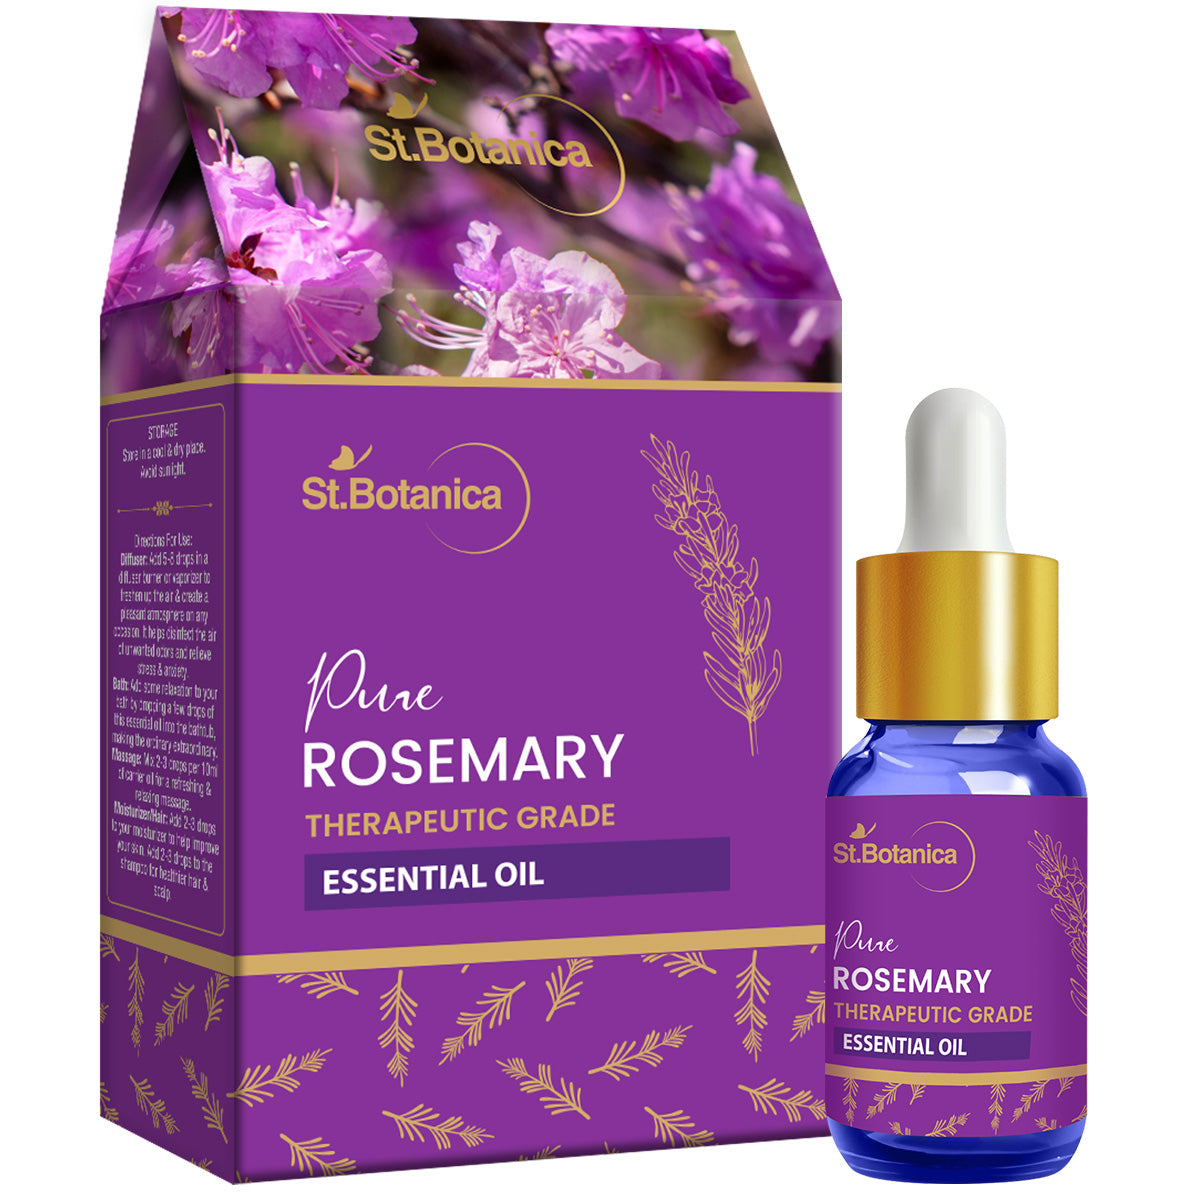 St.Botanica Pure Rosemary Essential Oil, 15ml